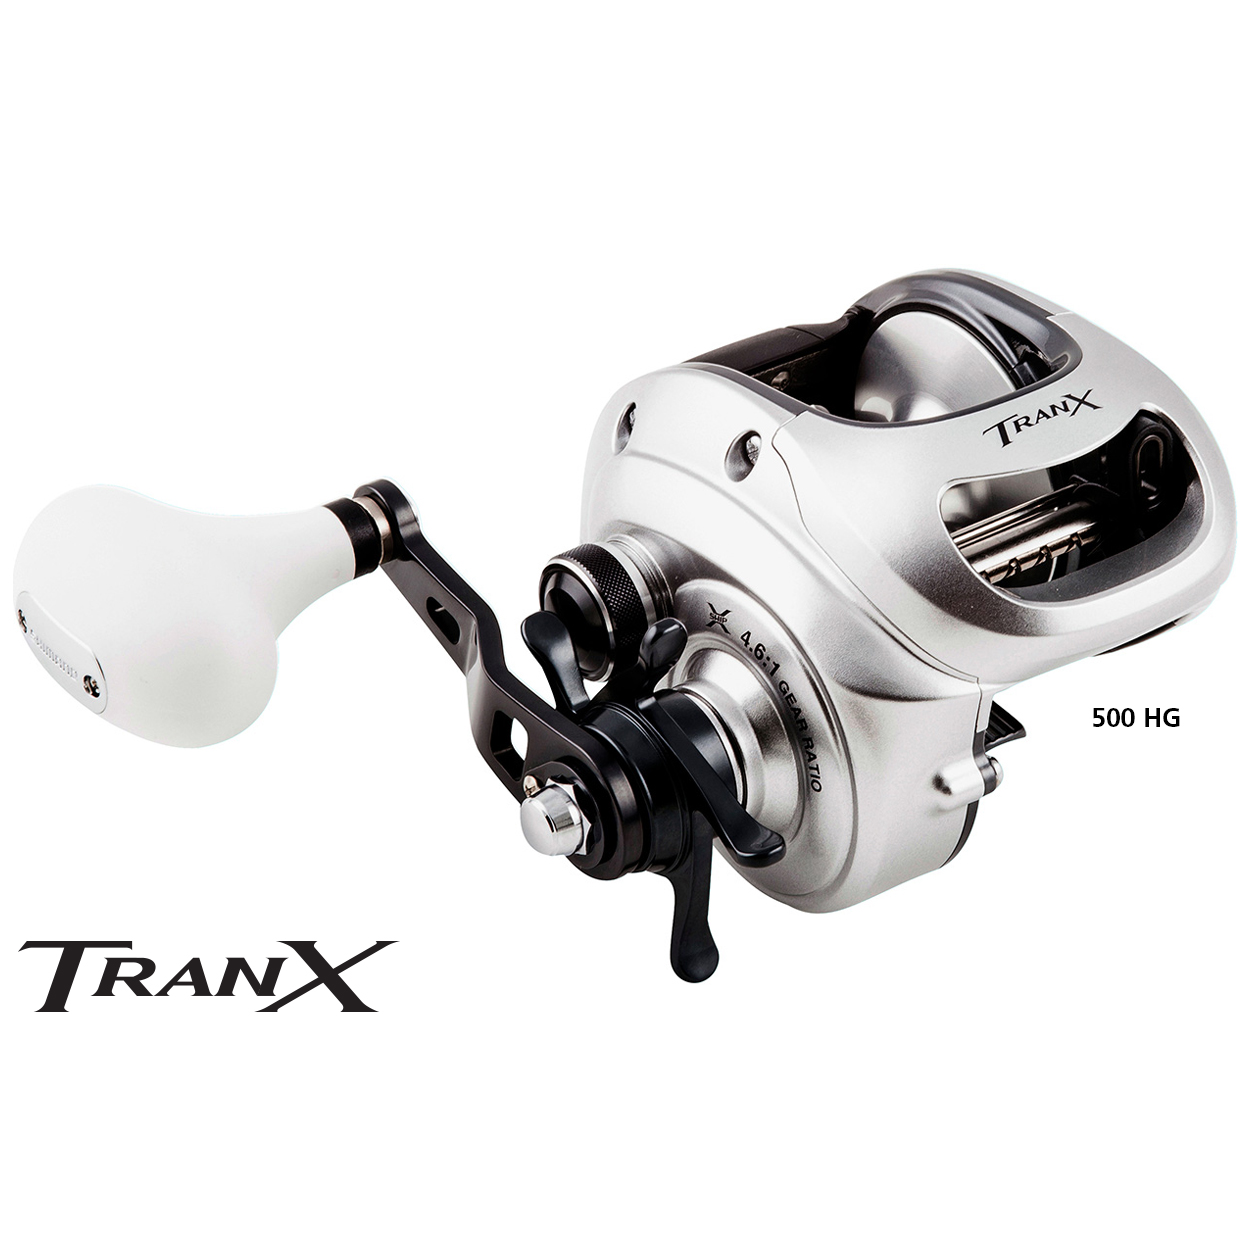 Tranx 500 : r/Fishing_Gear